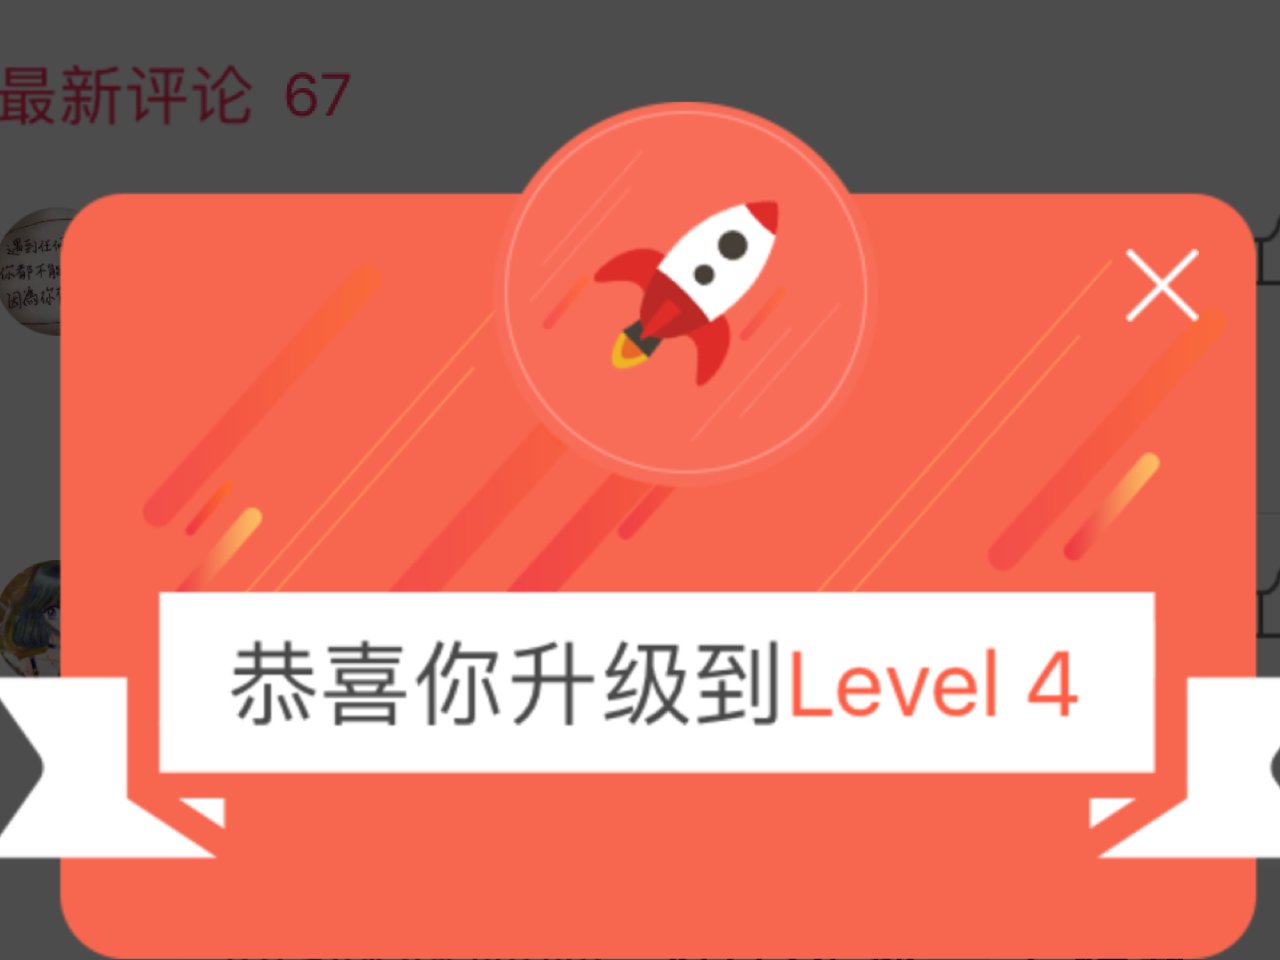 level 4